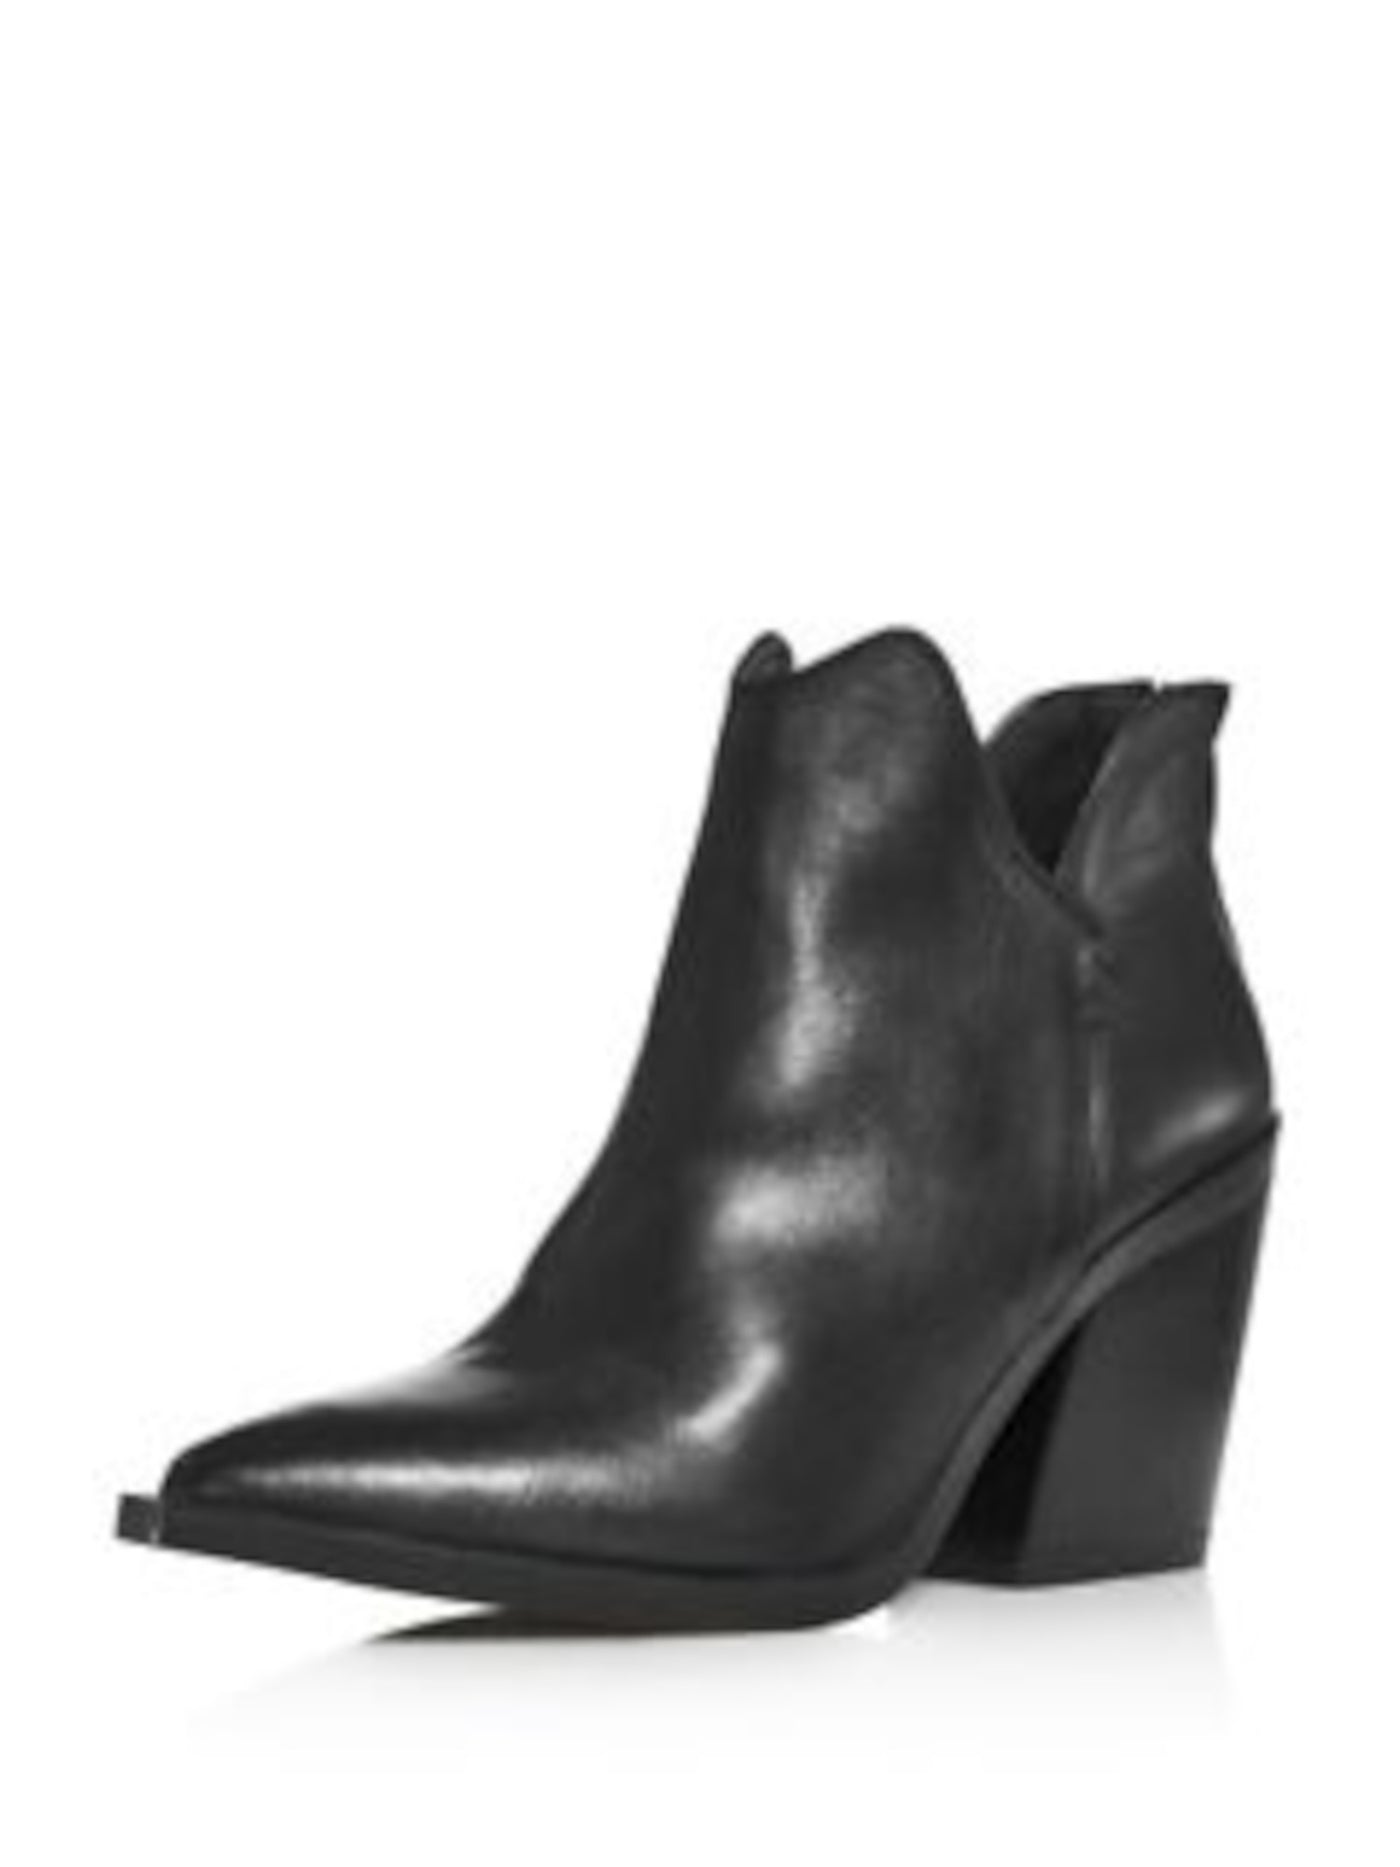 AQUA Womens Black Asymmetrical Comfort Amil Square Toe Block Heel Zip-Up Leather Booties 9 M